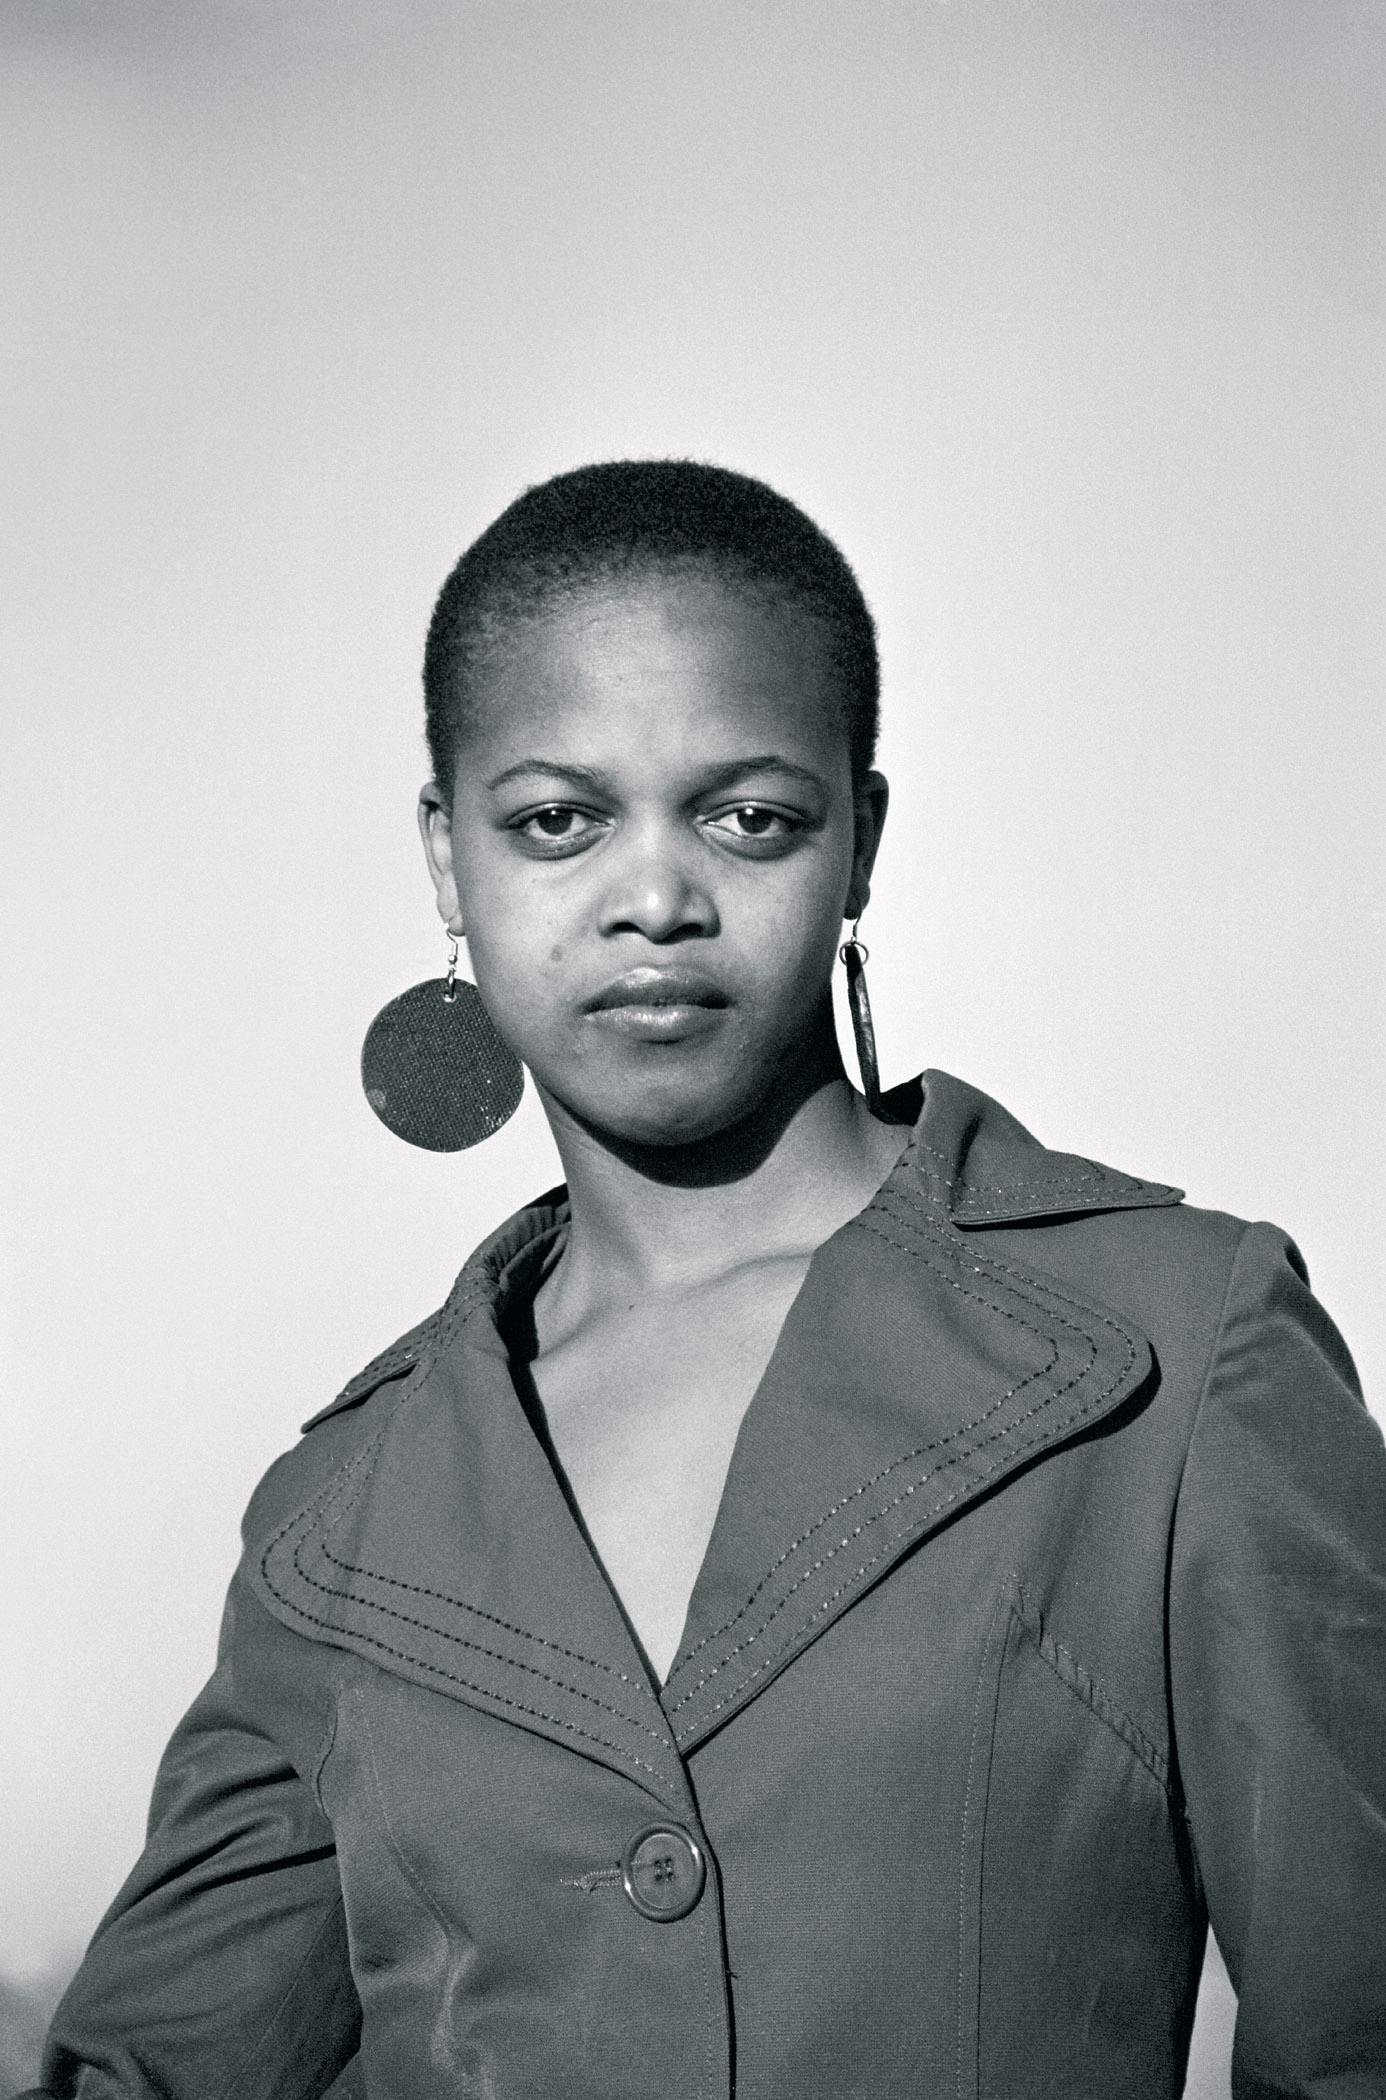     Zanele Muholi, Nosi &#8216;Ginga&#8217; Marumo, Yeoville, Johannesburg, 2007 Â© Zanele Muholi and Stevenson Cape Town/Johannesburg

